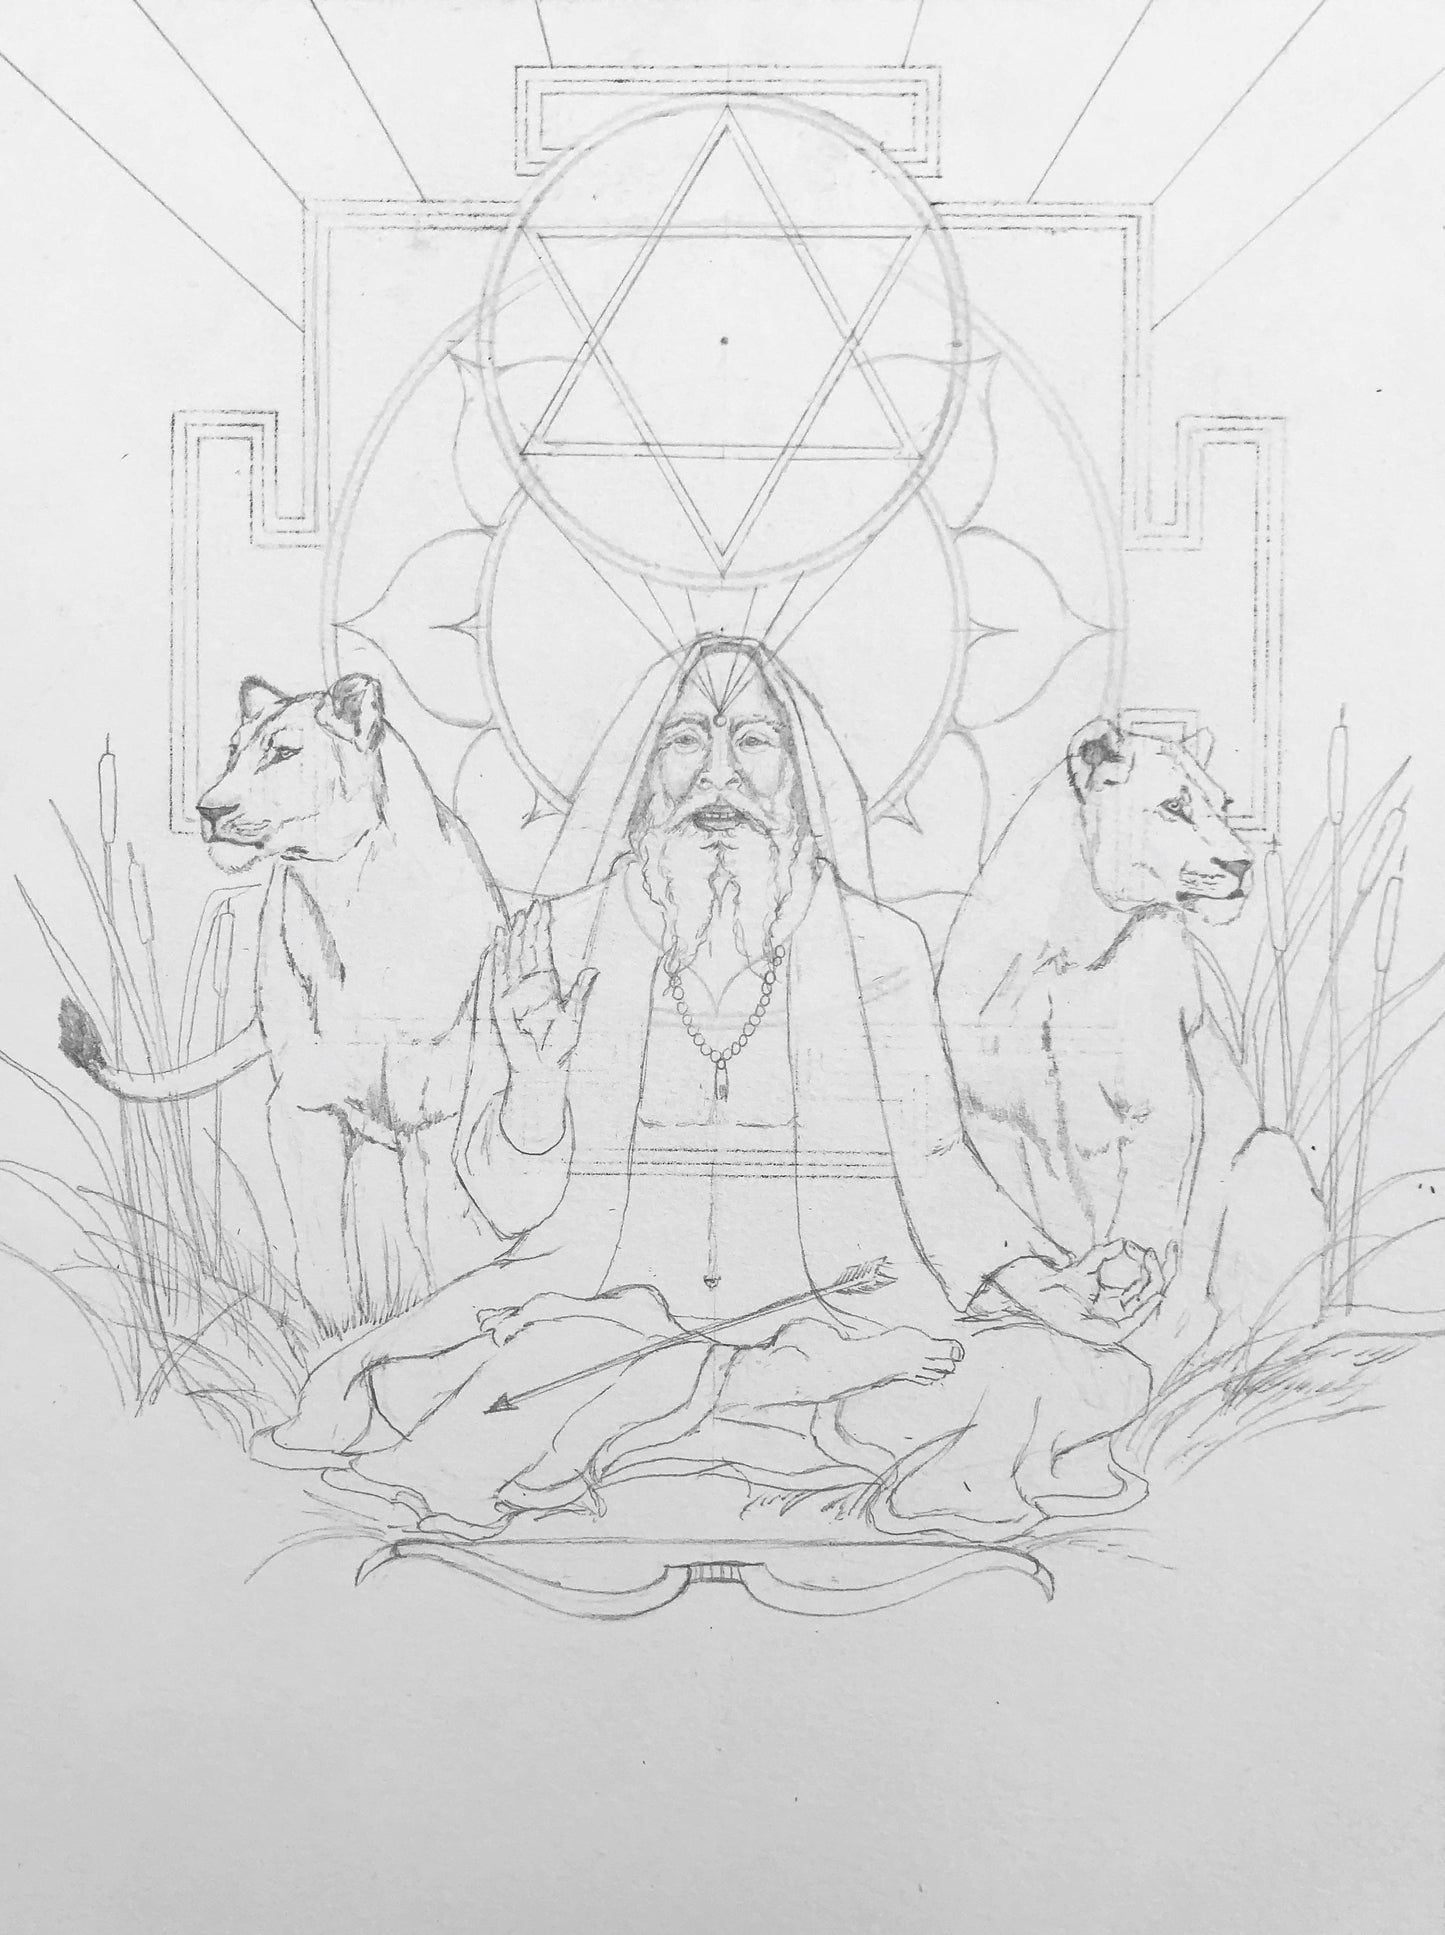 Budha (Mercury) | Mantra Oracle Art Print | Om Budhāya Namaha